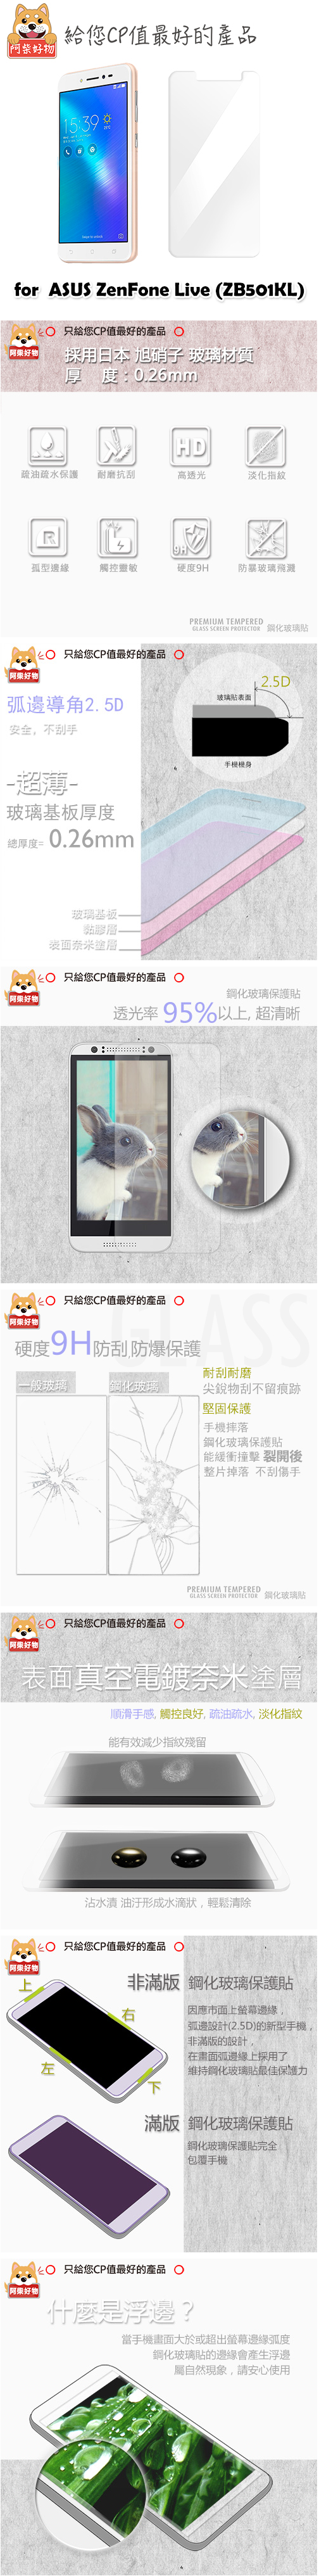 【阿柴好物】ASUS ZenFone Live ZB501KL(9H鋼化玻璃保護貼)